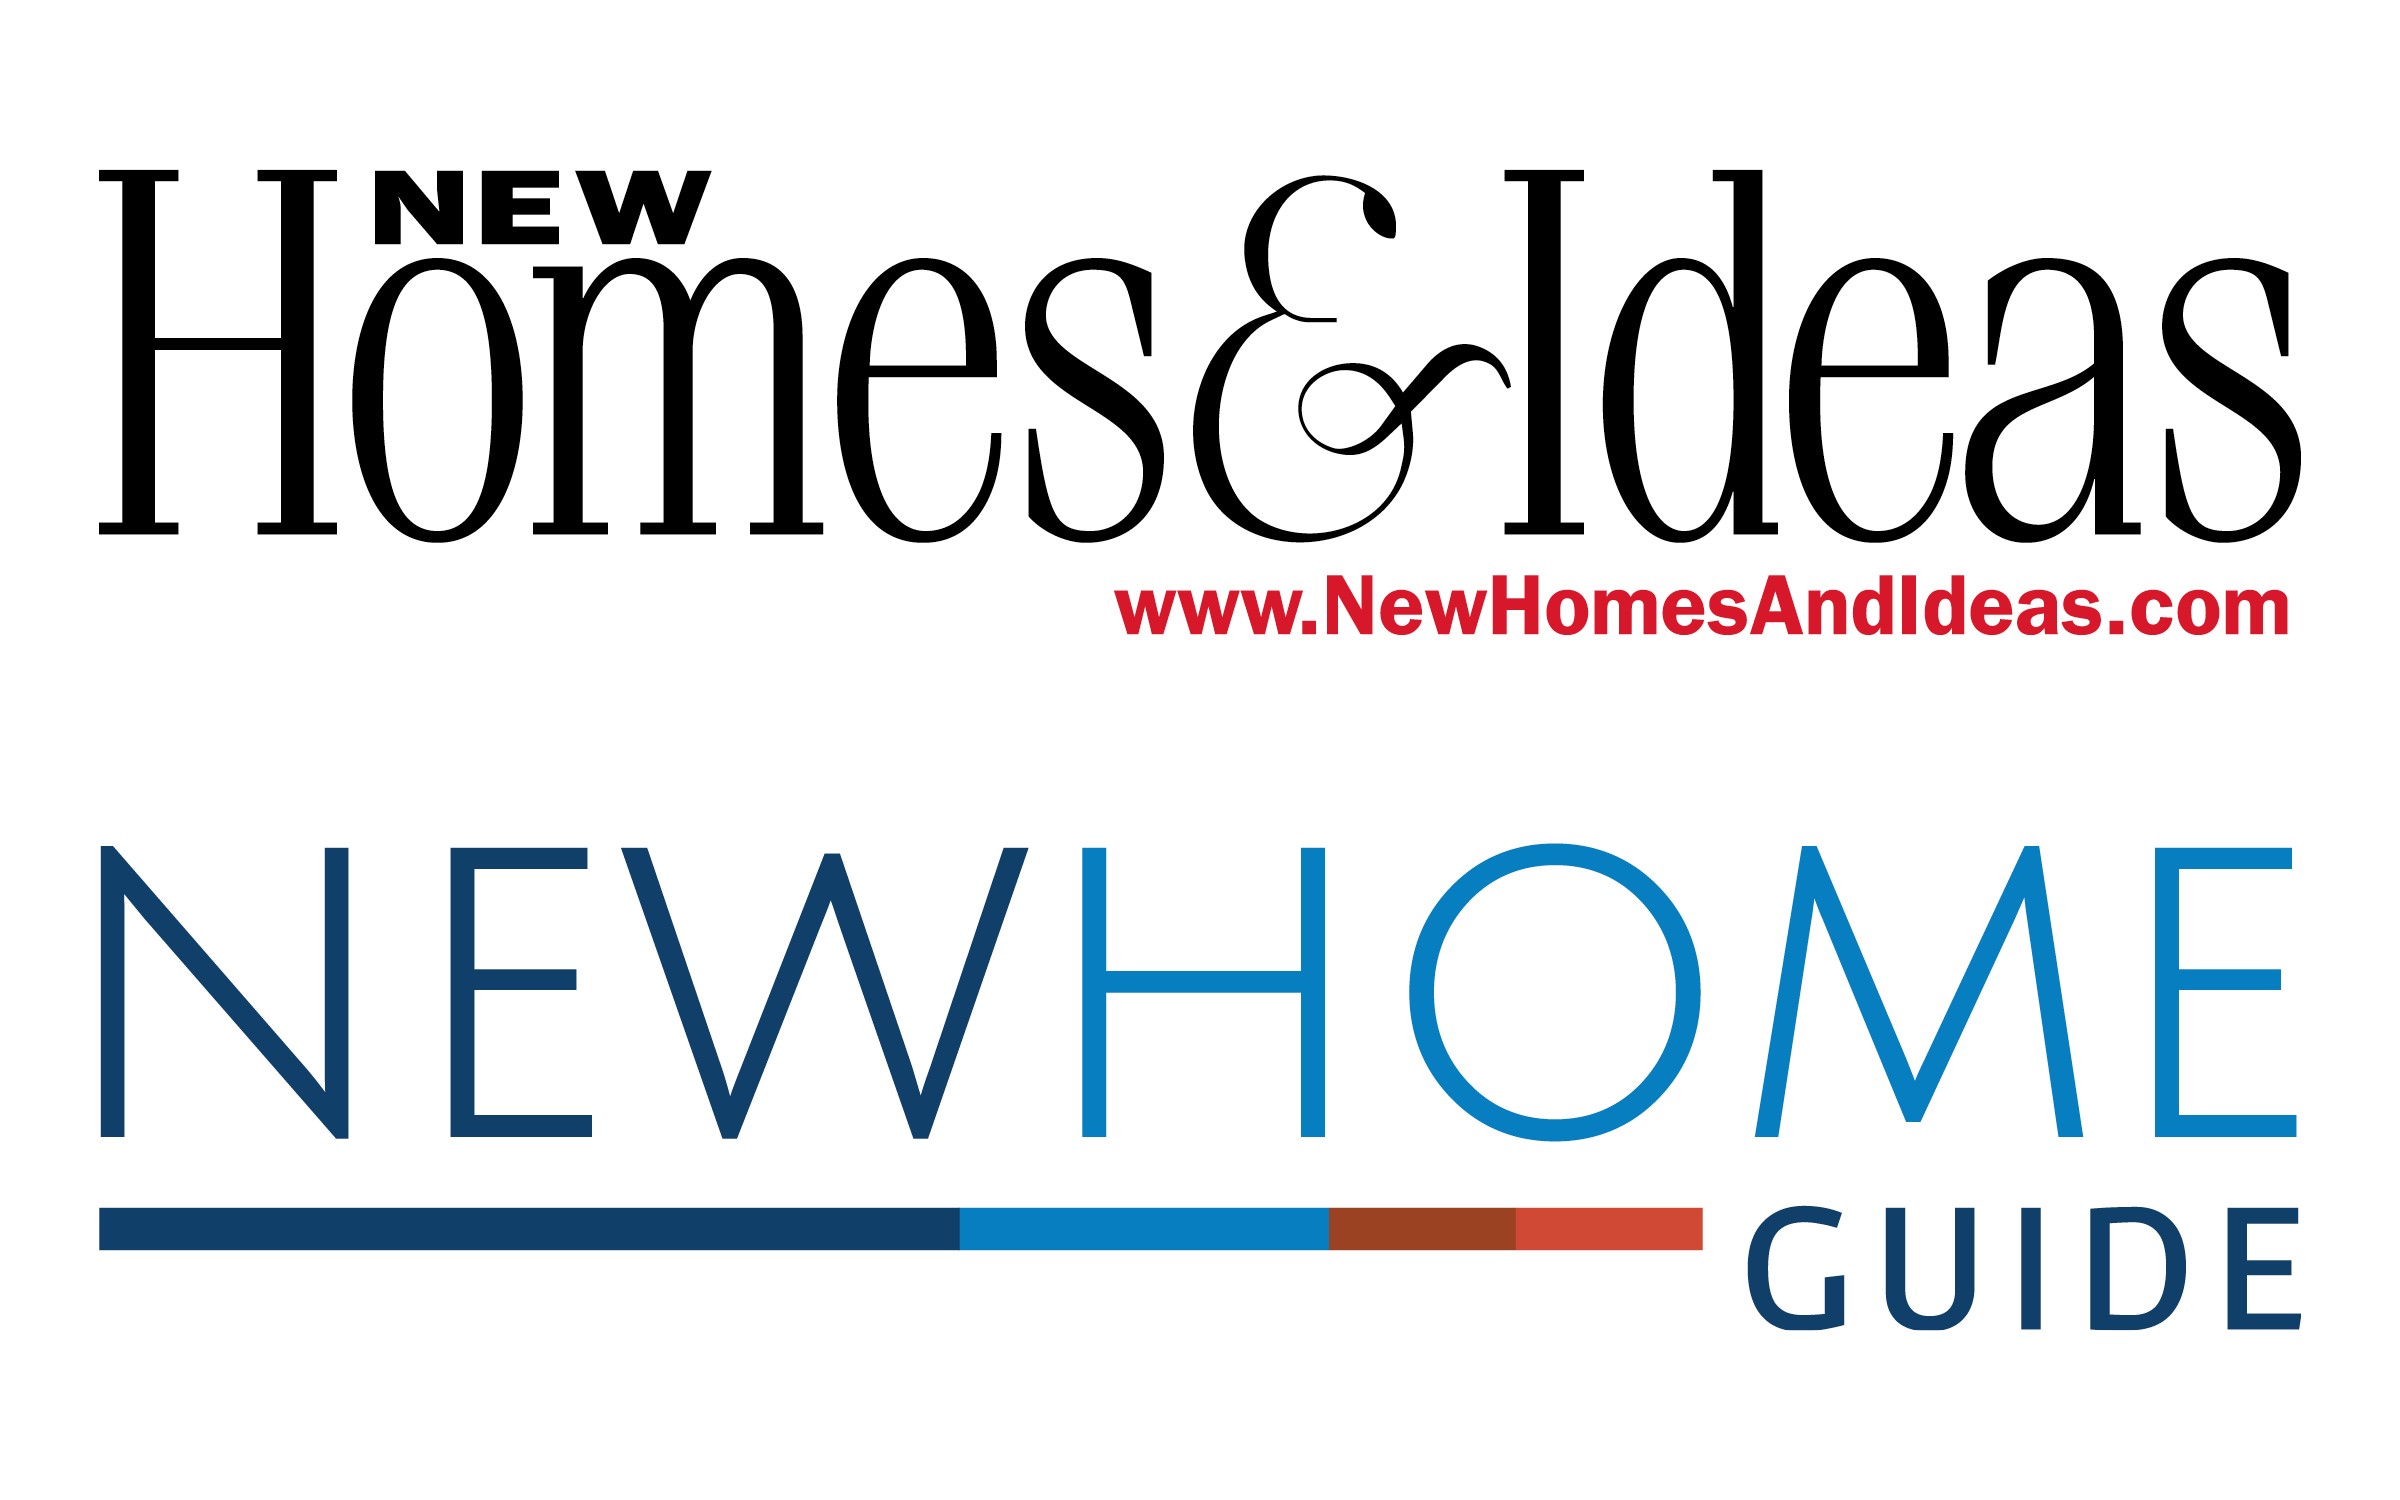 New Homes & Ideas /NewPoint Media Group, LLC 